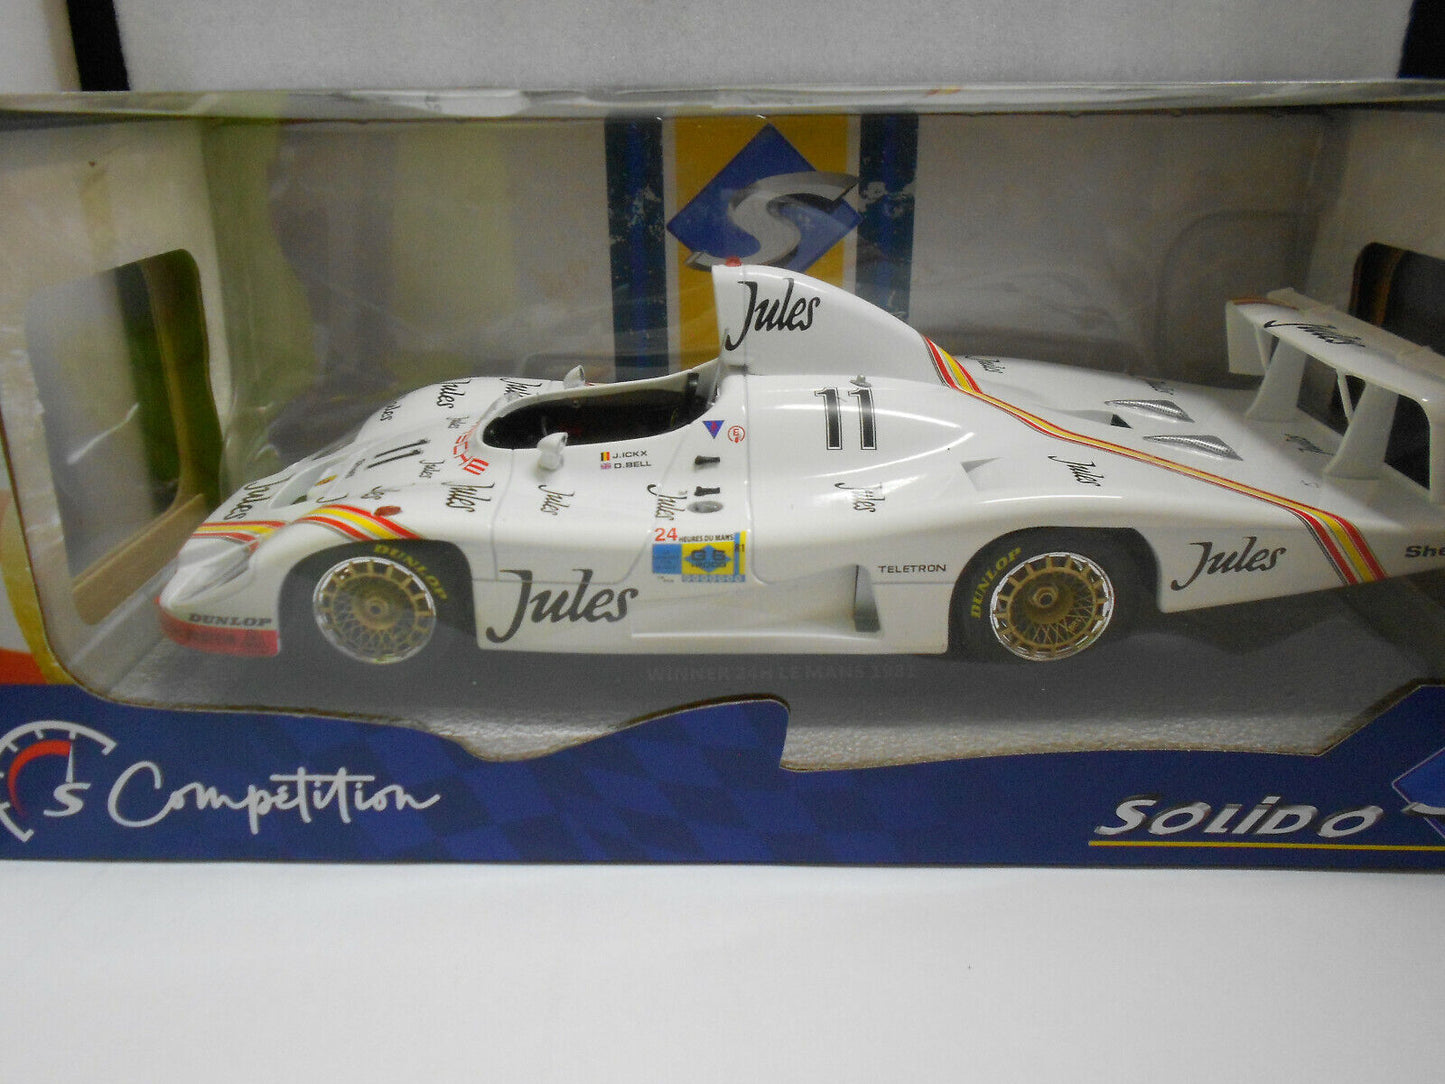 SOLIDO 1/18 Porsche 936 #11 Jules 1981 Le Mans Winnder ICKX / BELL #S1805602